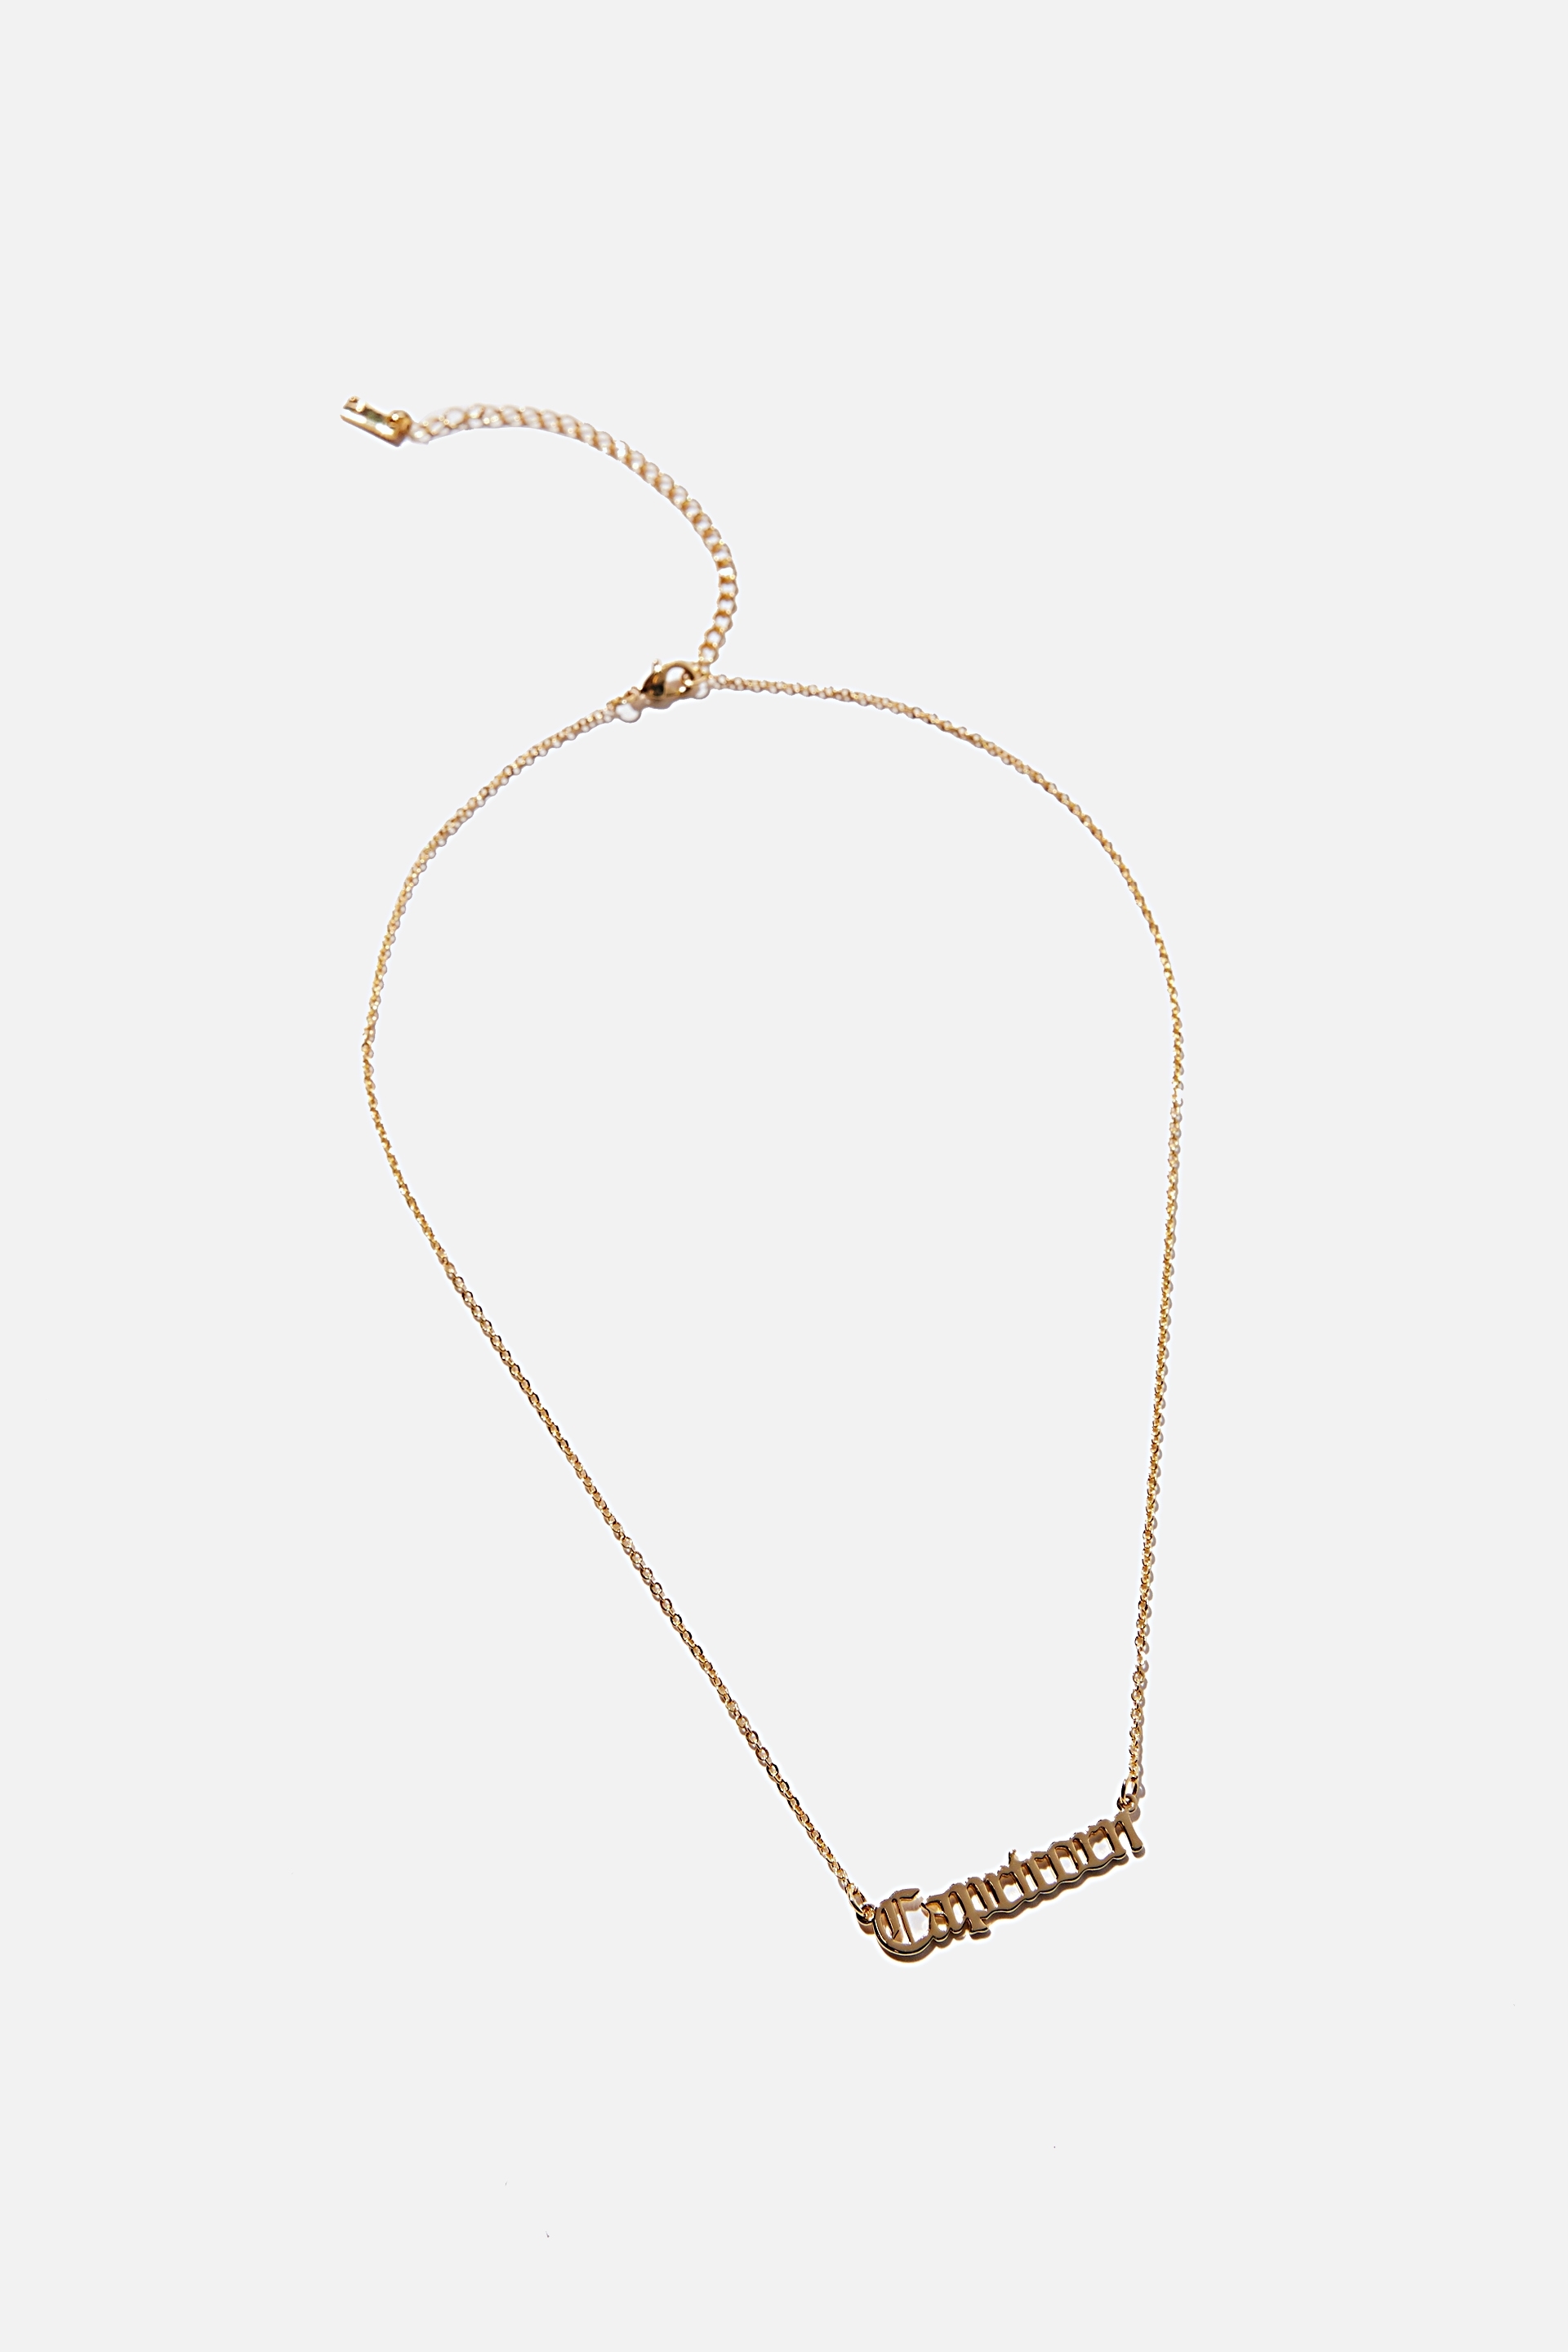 Rubi - Premium Pendant Necklace - Gold plated capricorn